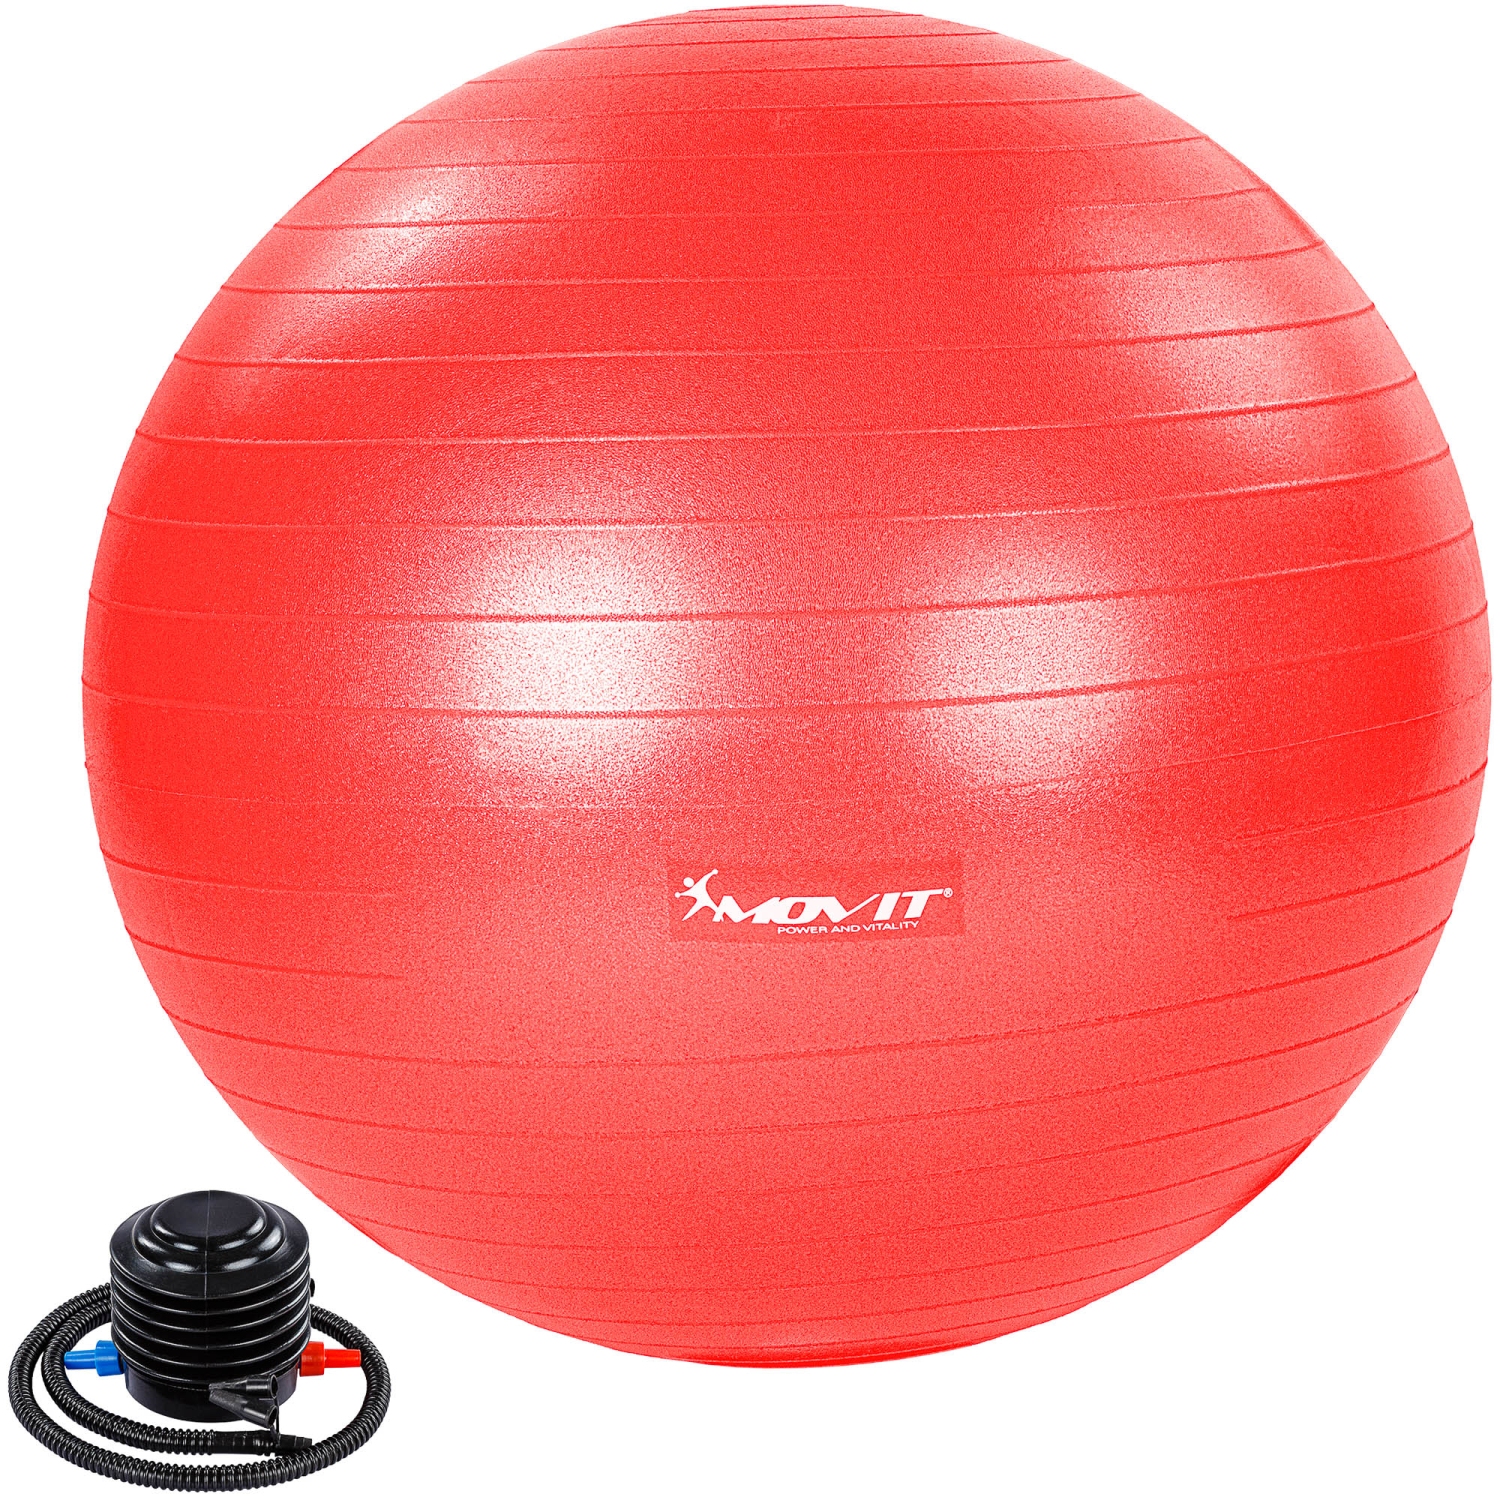 Yoga bal – Pilates bal – Fitness bal – 85 cm – Inclusief pomp – Rood